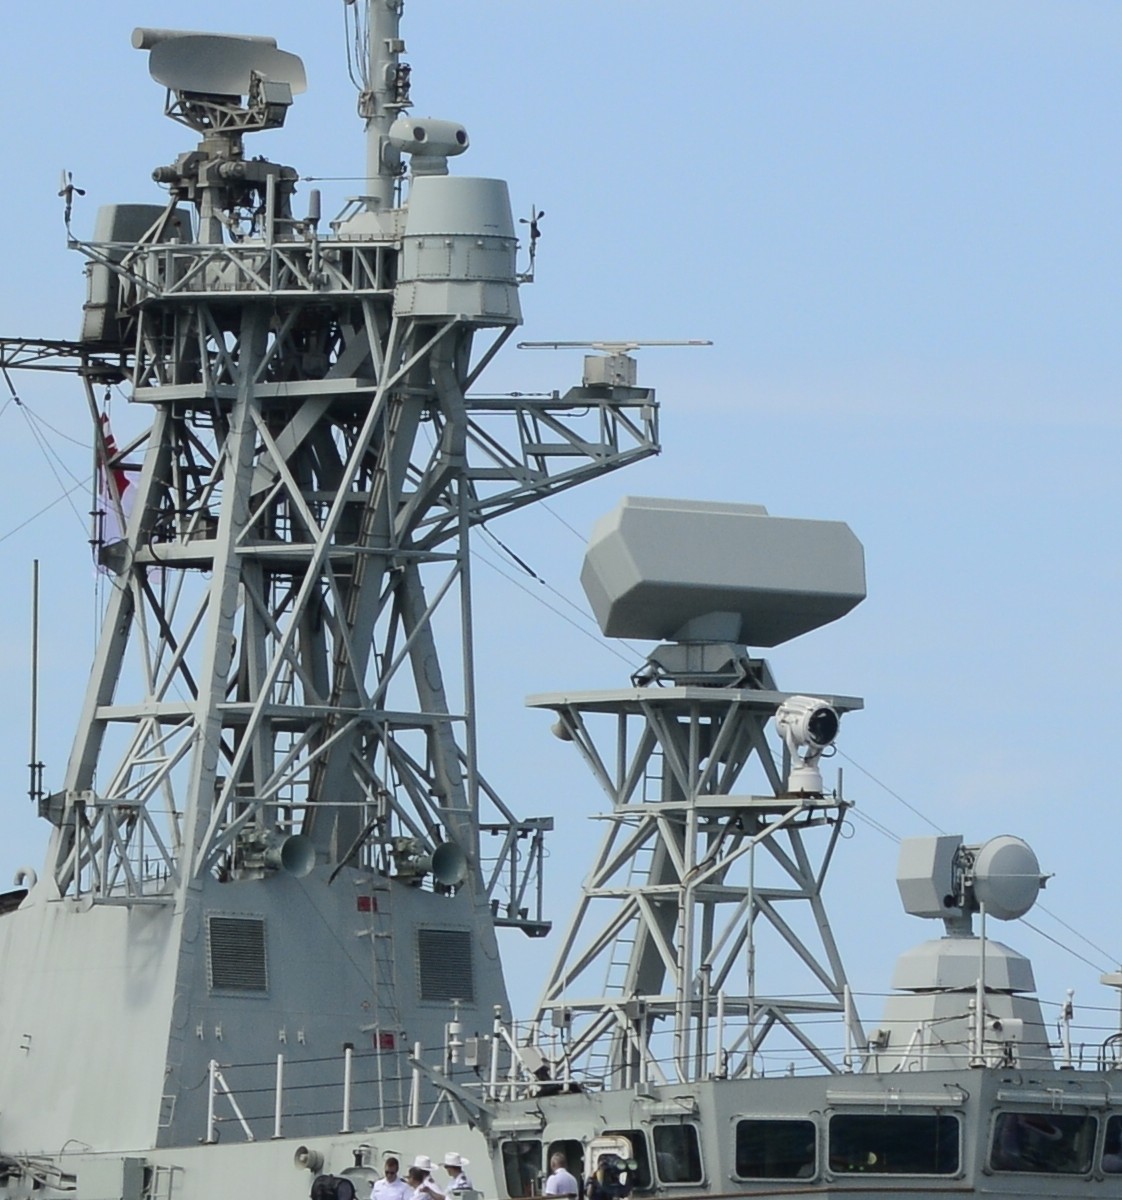 ffh-335 hmcs calgary halifax class helicopter patrol frigate ncsm royal canadian navy saab sea giraffe radar ceros-200 fire control thales smart-s